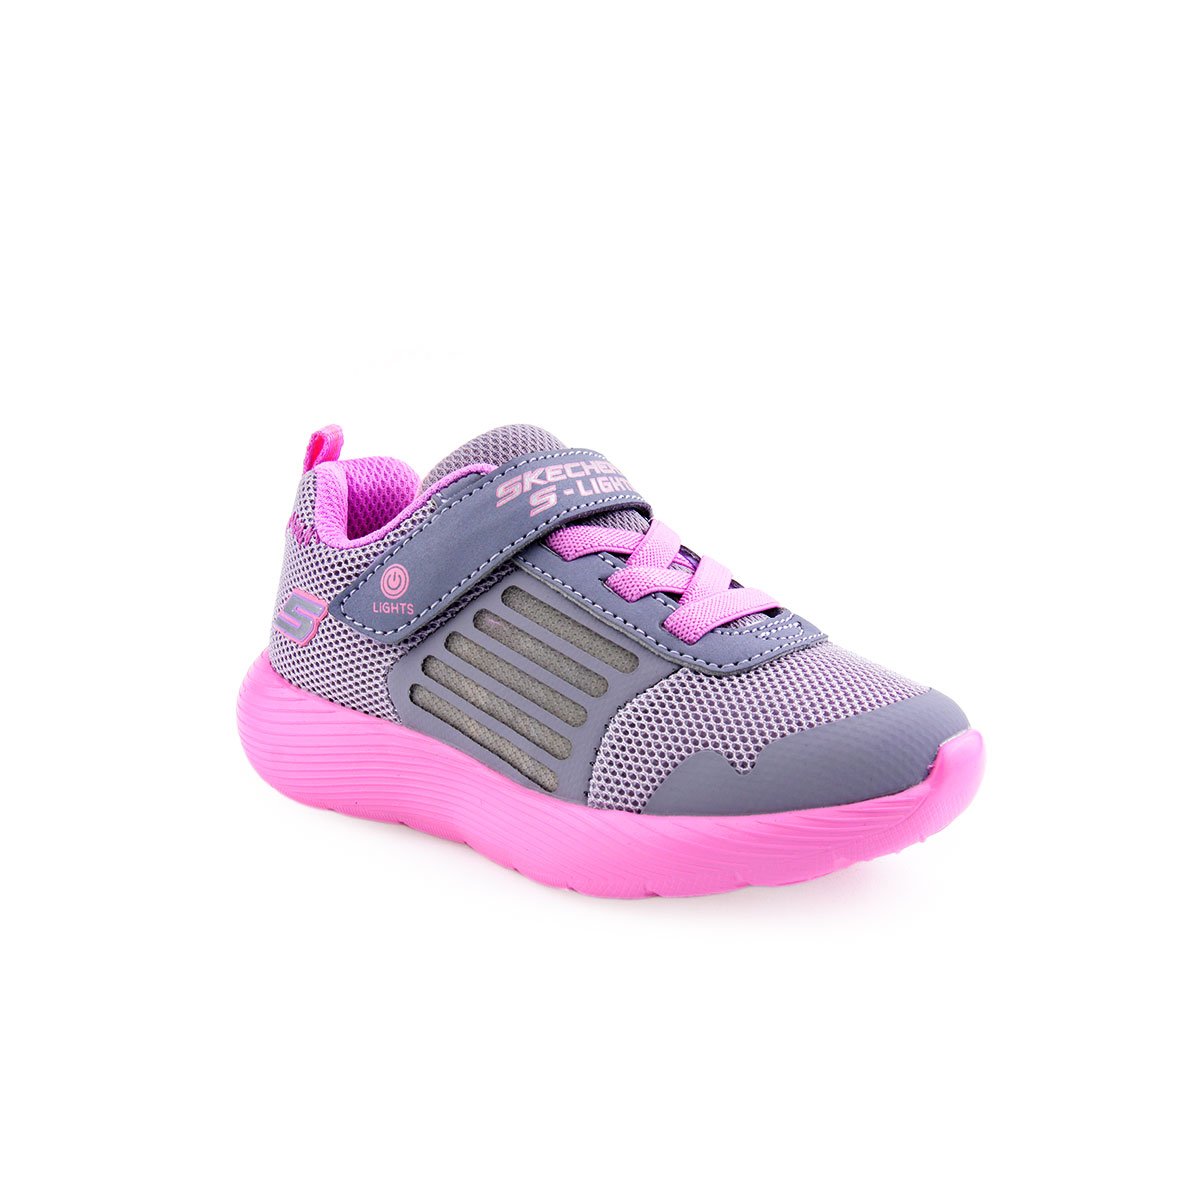 infants shoes online